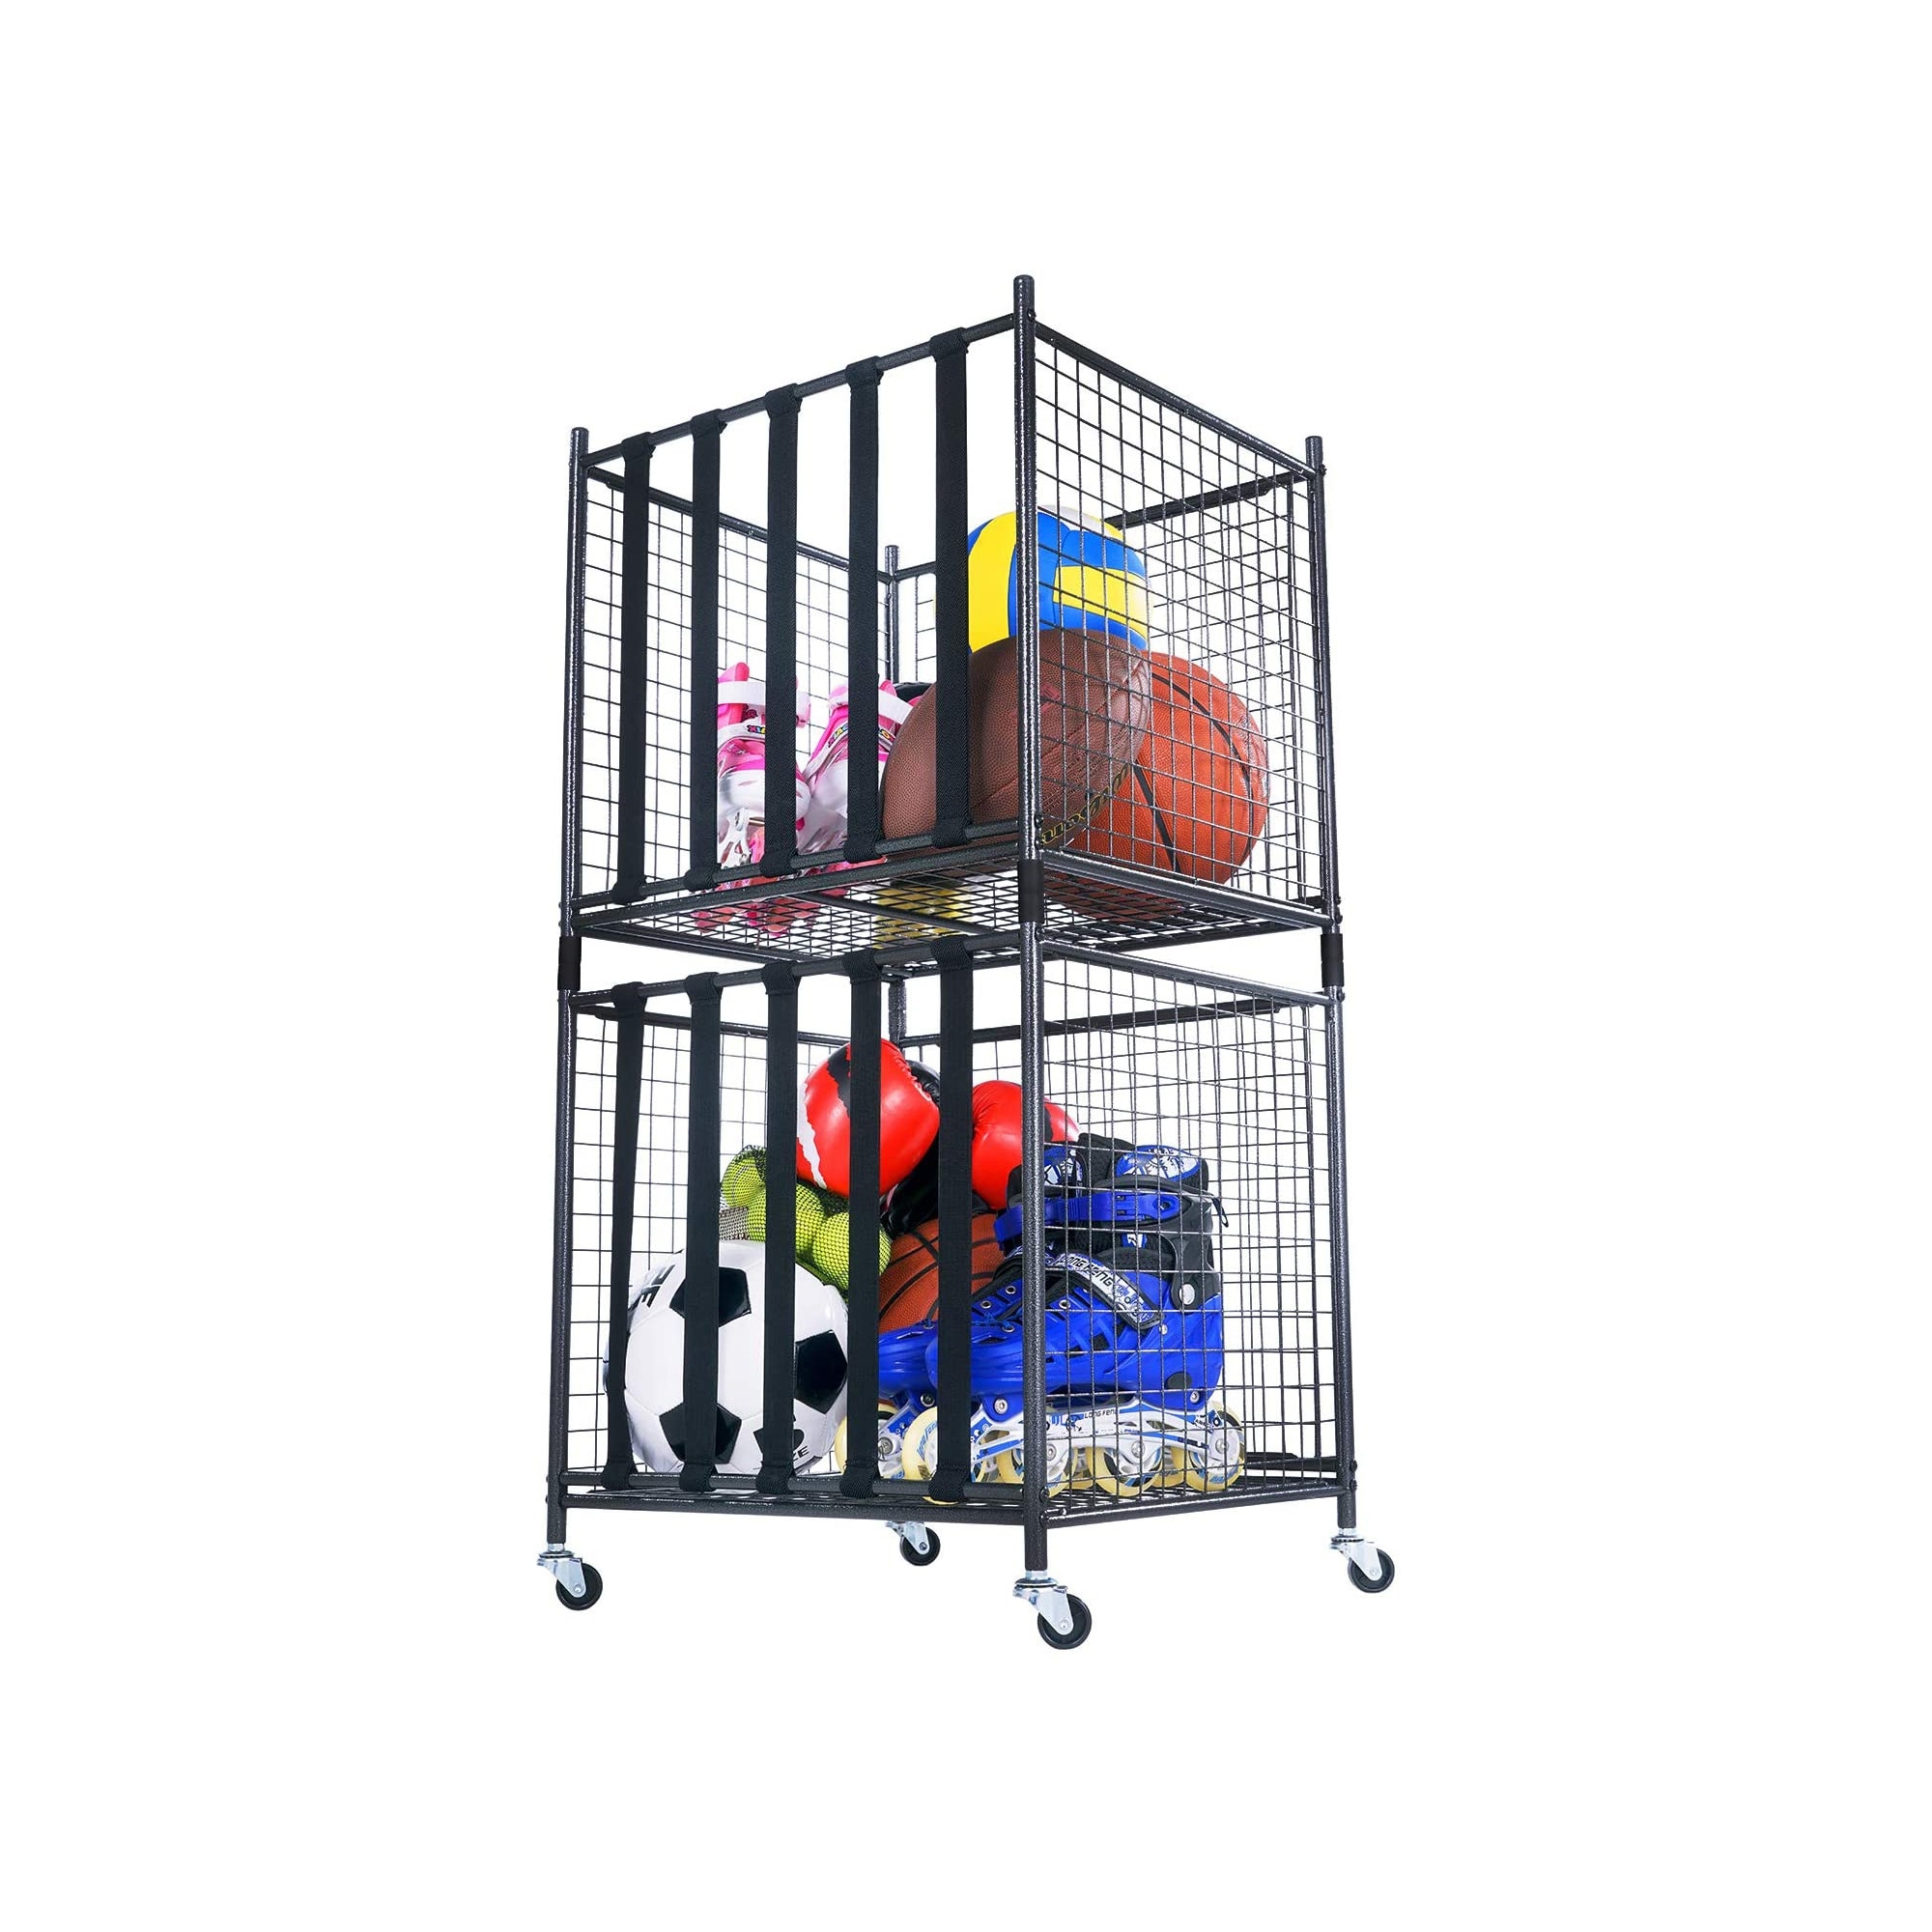 Basketball Storage Cage Cart